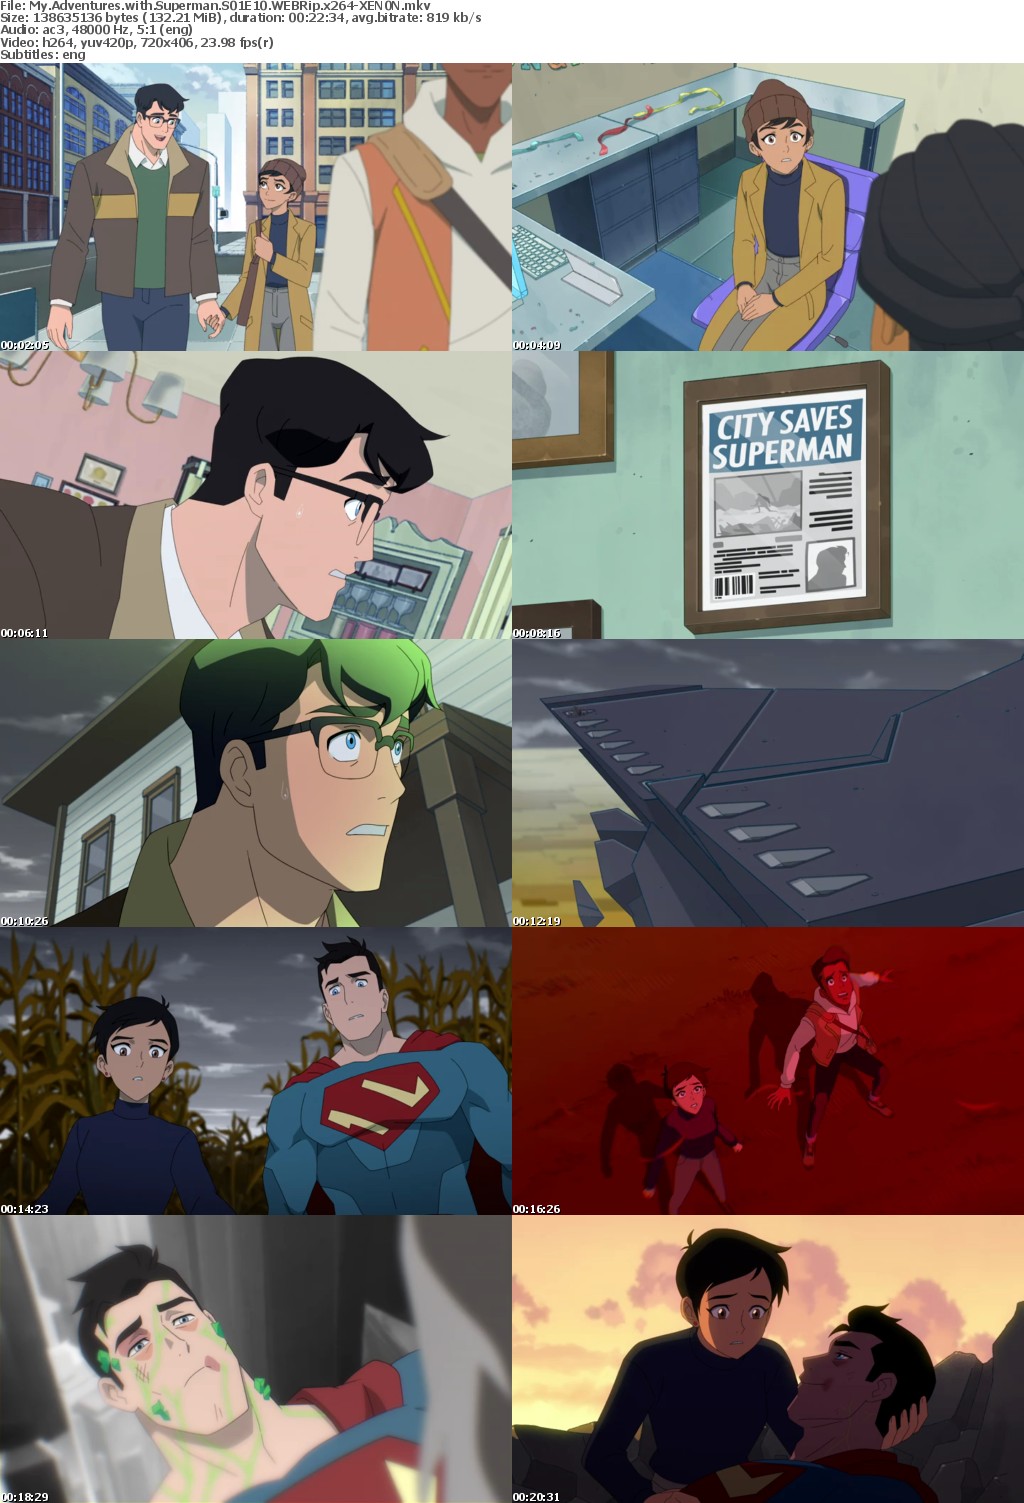 My Adventures with Superman S01E10 WEBRip x264-XEN0N